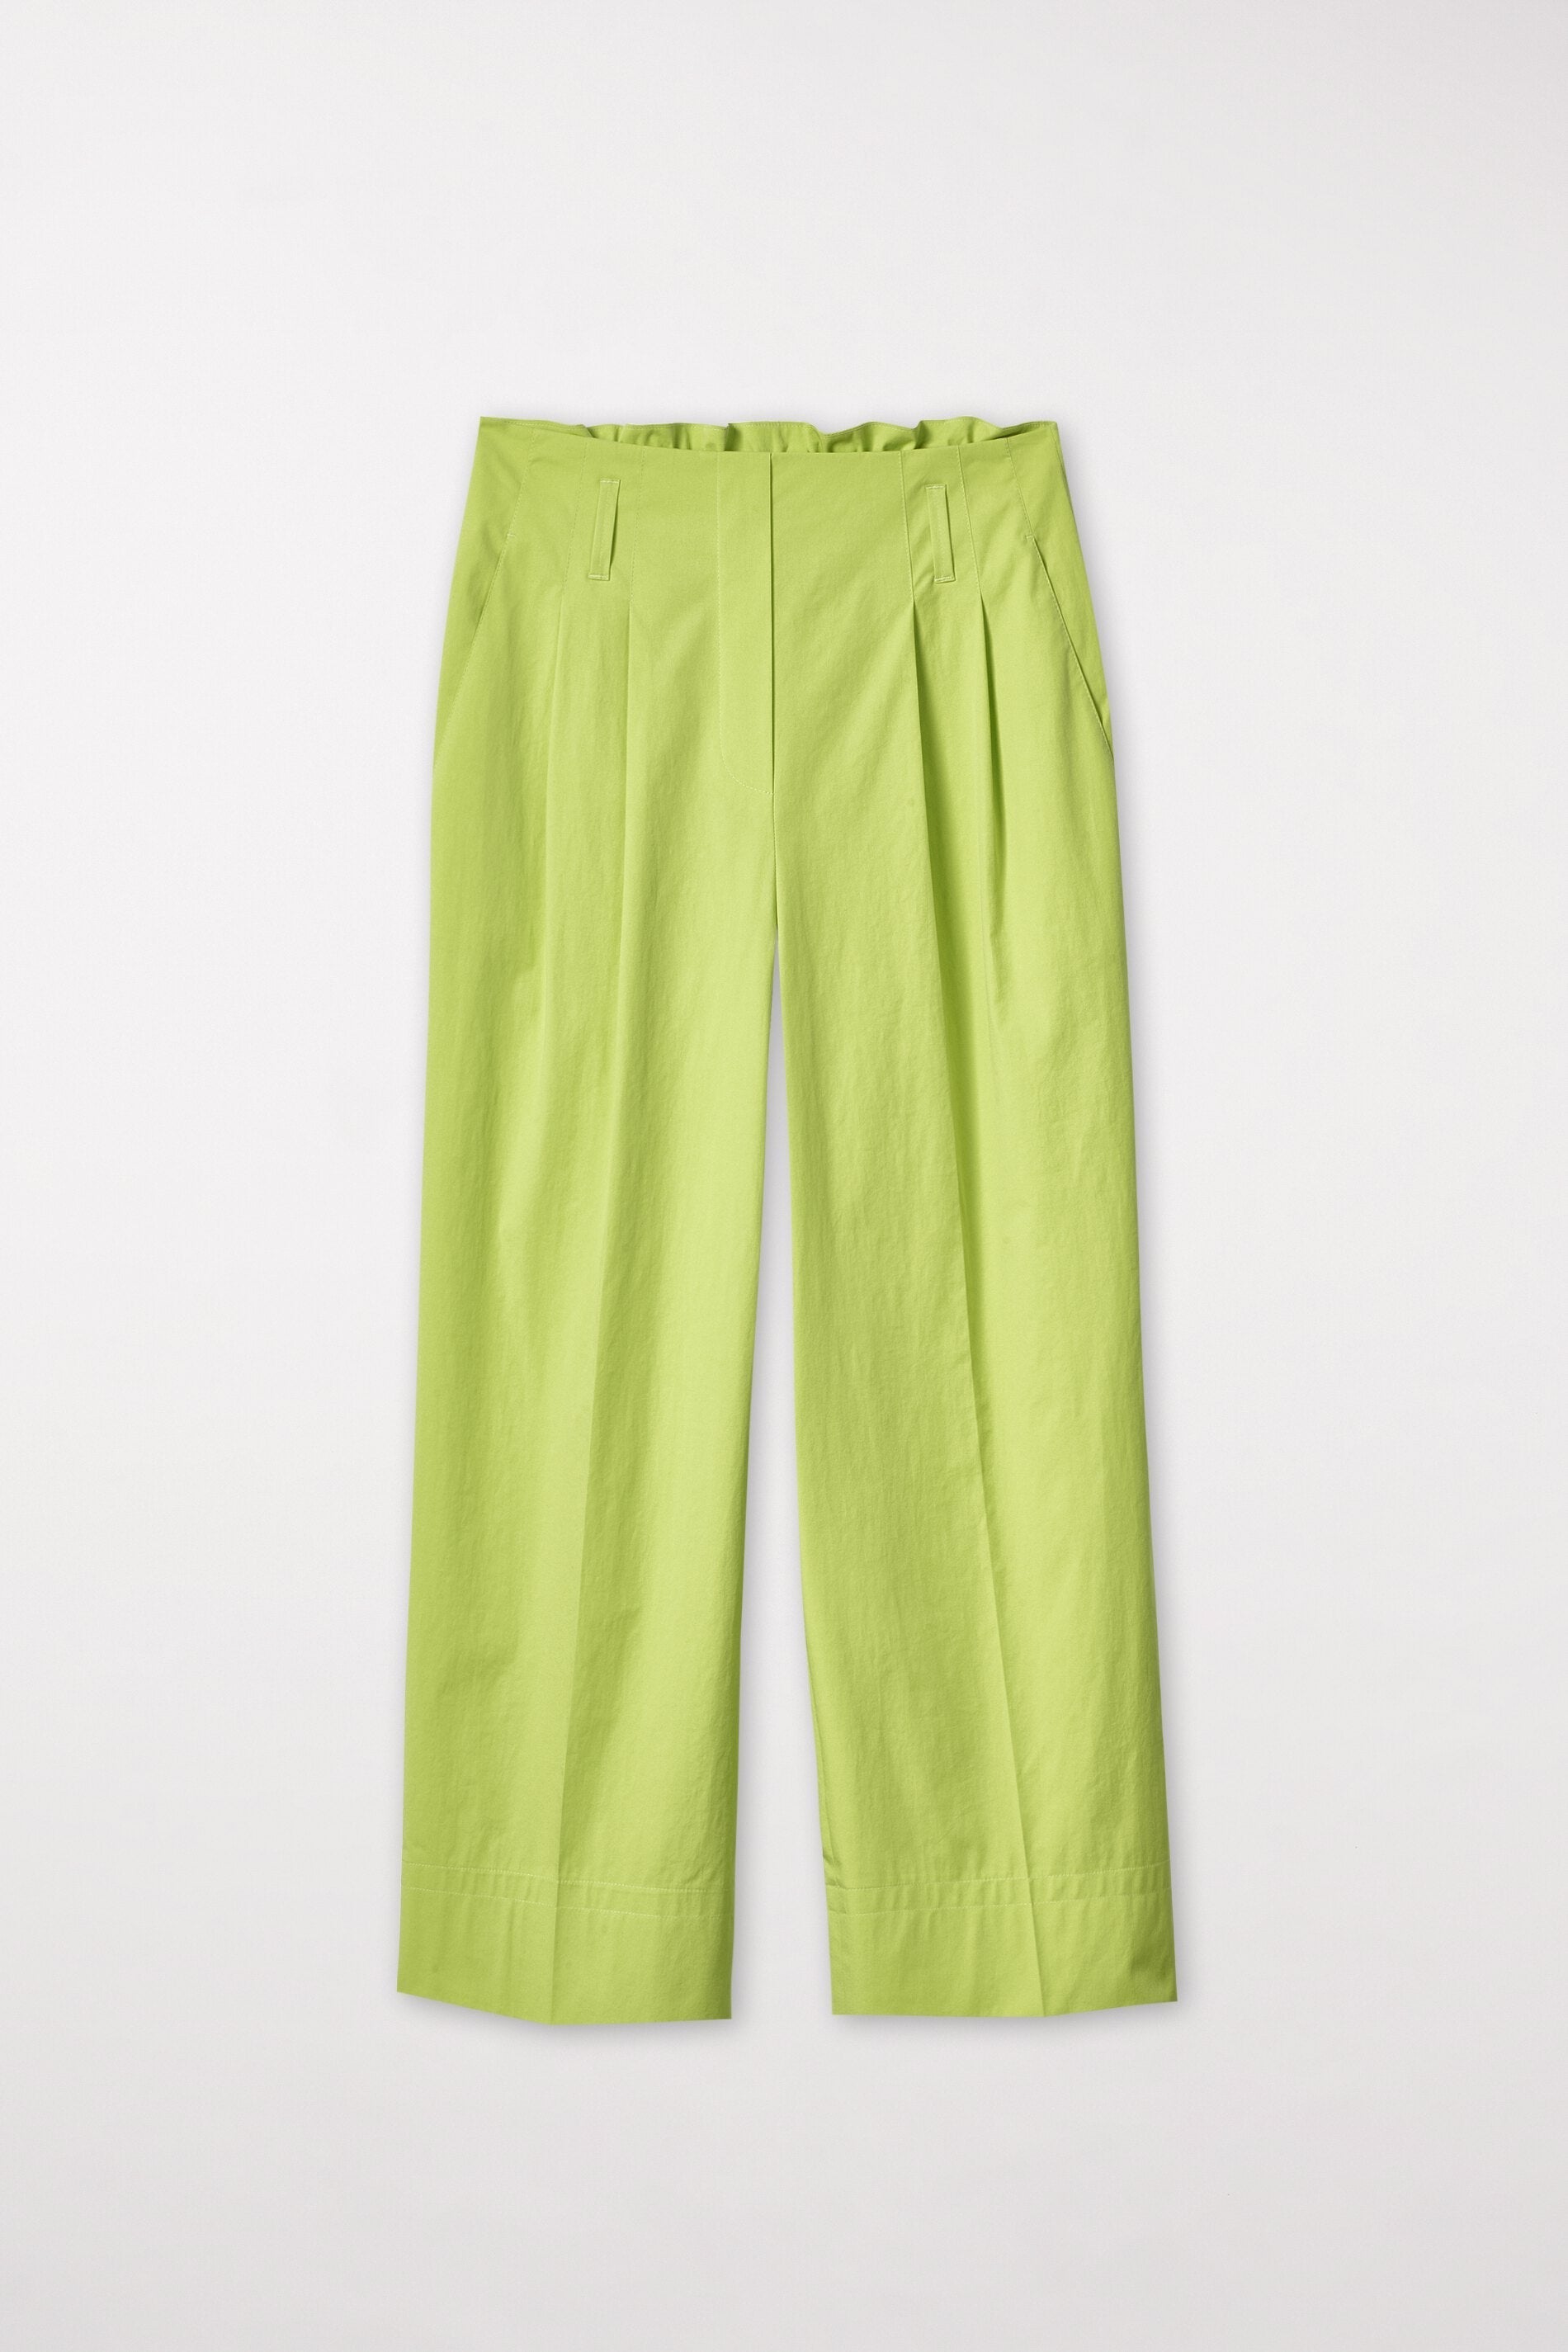 LUISA CERANO-OUTLET-SALE-Gabardine-Paperbag-Pants-Hosen-34-lime green-by-ARCHIVIST